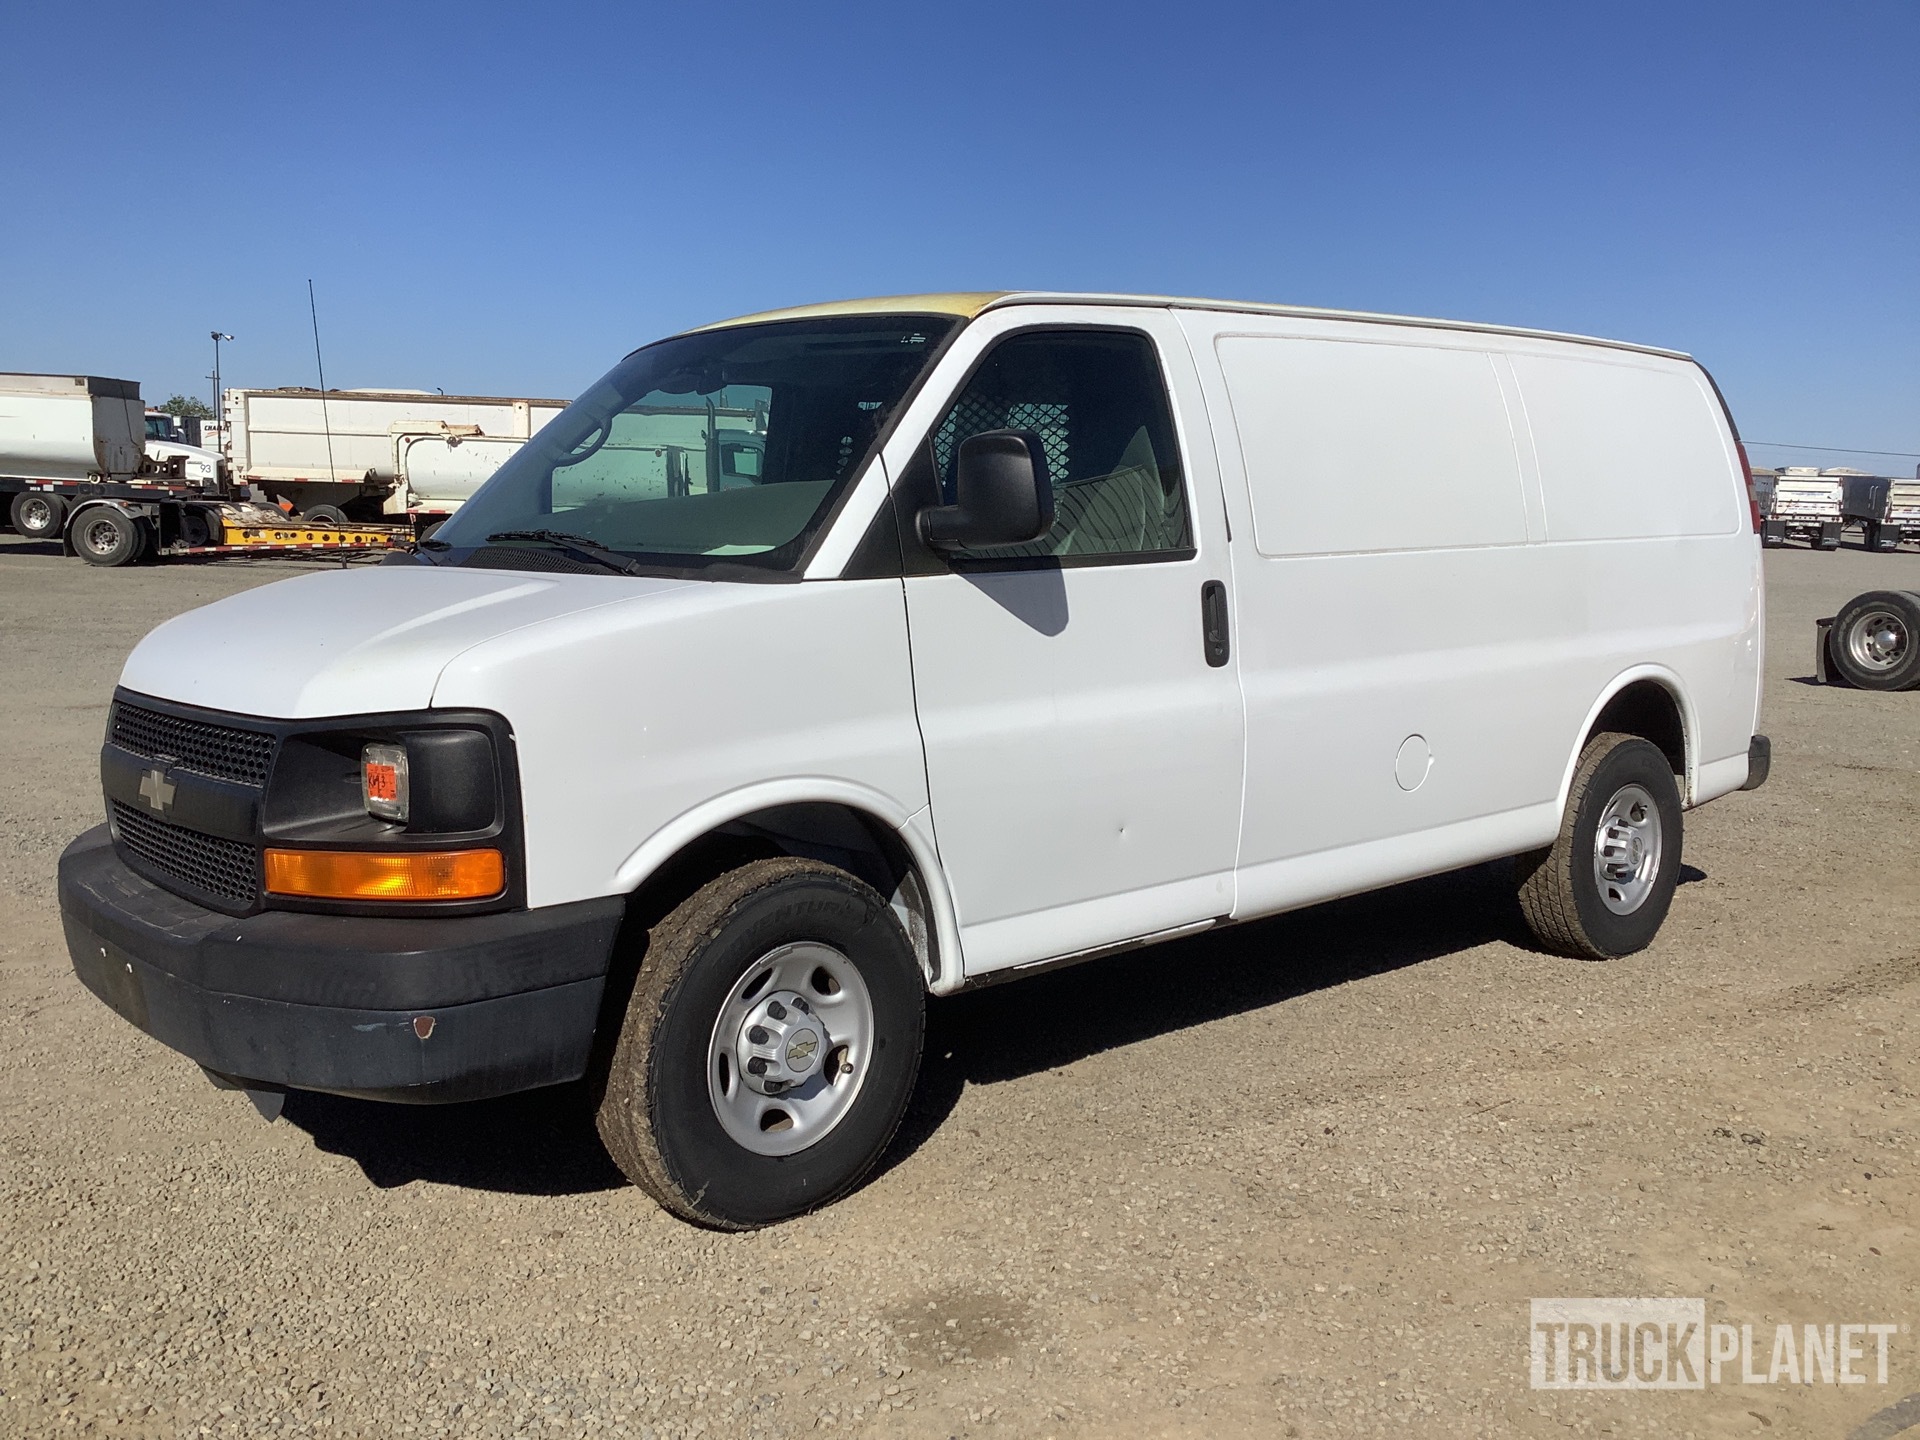 2008 Chevrolet Express 2500 4x2 Cargo Van in Dunnigan, California, United  States (TruckPlanet Item #6187487)